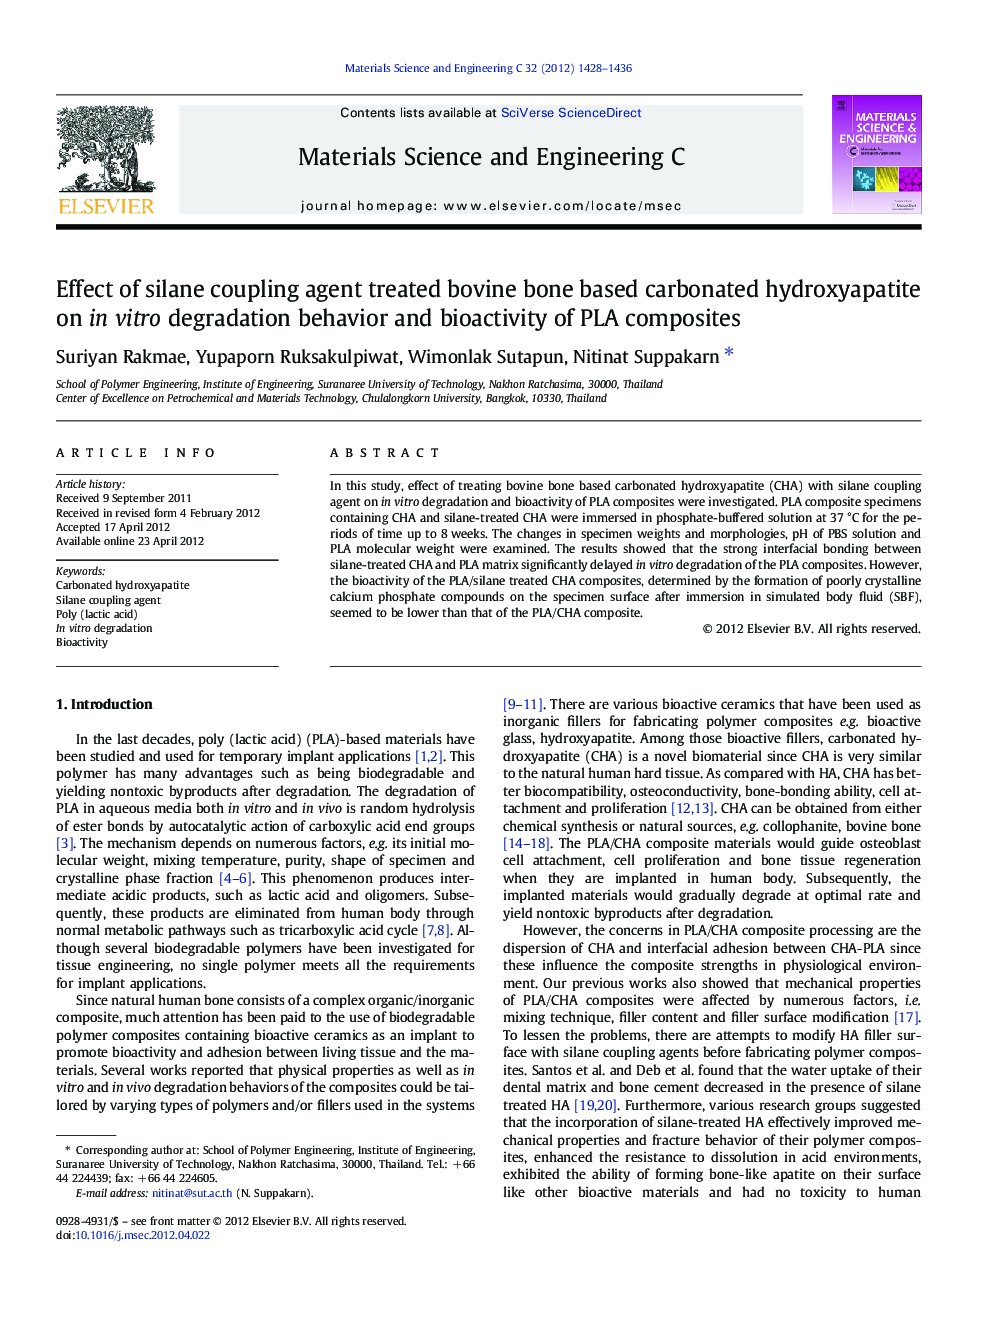 Effect of silane coupling agent treated bovine bone based carbonated hydroxyapatite on in vitro degradation behavior and bioactivity of PLA composites